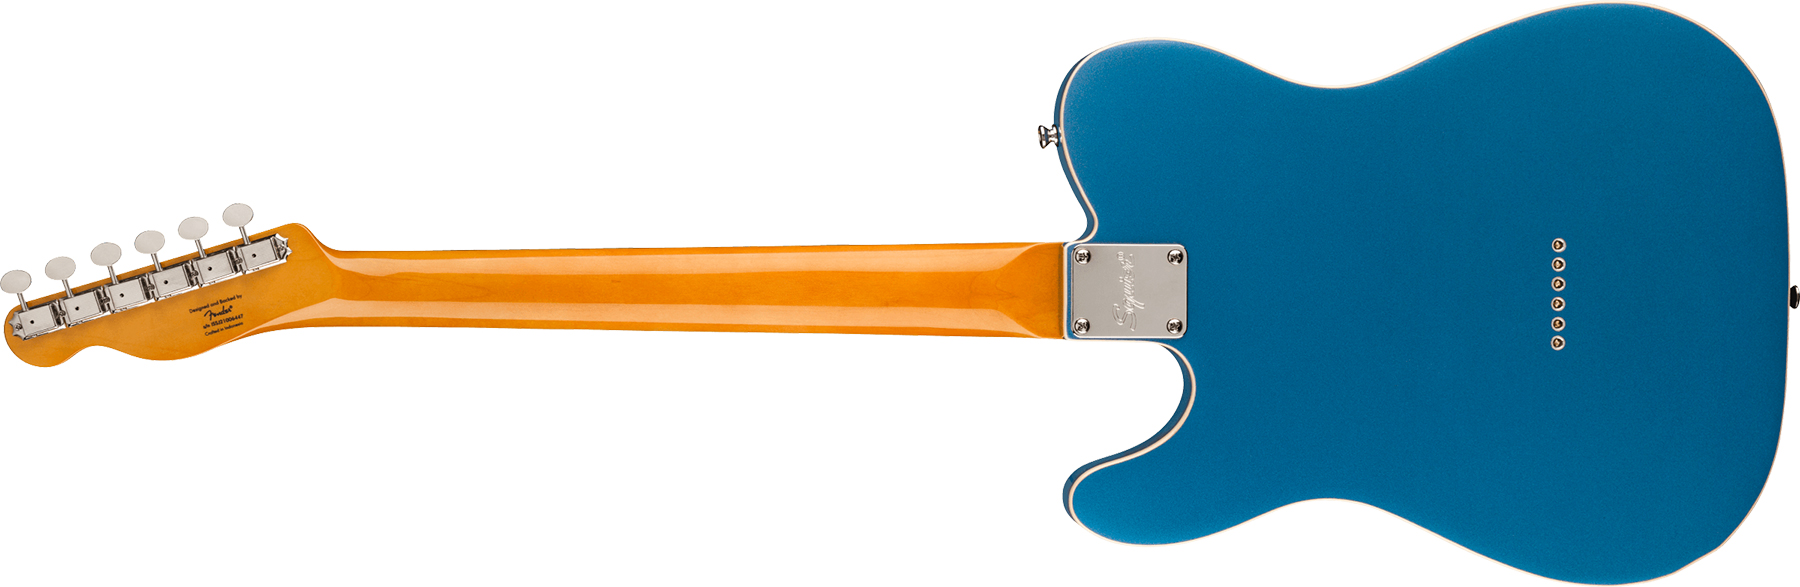 Squier Esquire Tele '60s Custom Classic Vibe Fsr Ltd Lau - Lake Placid Blue - Tel shape electric guitar - Variation 1